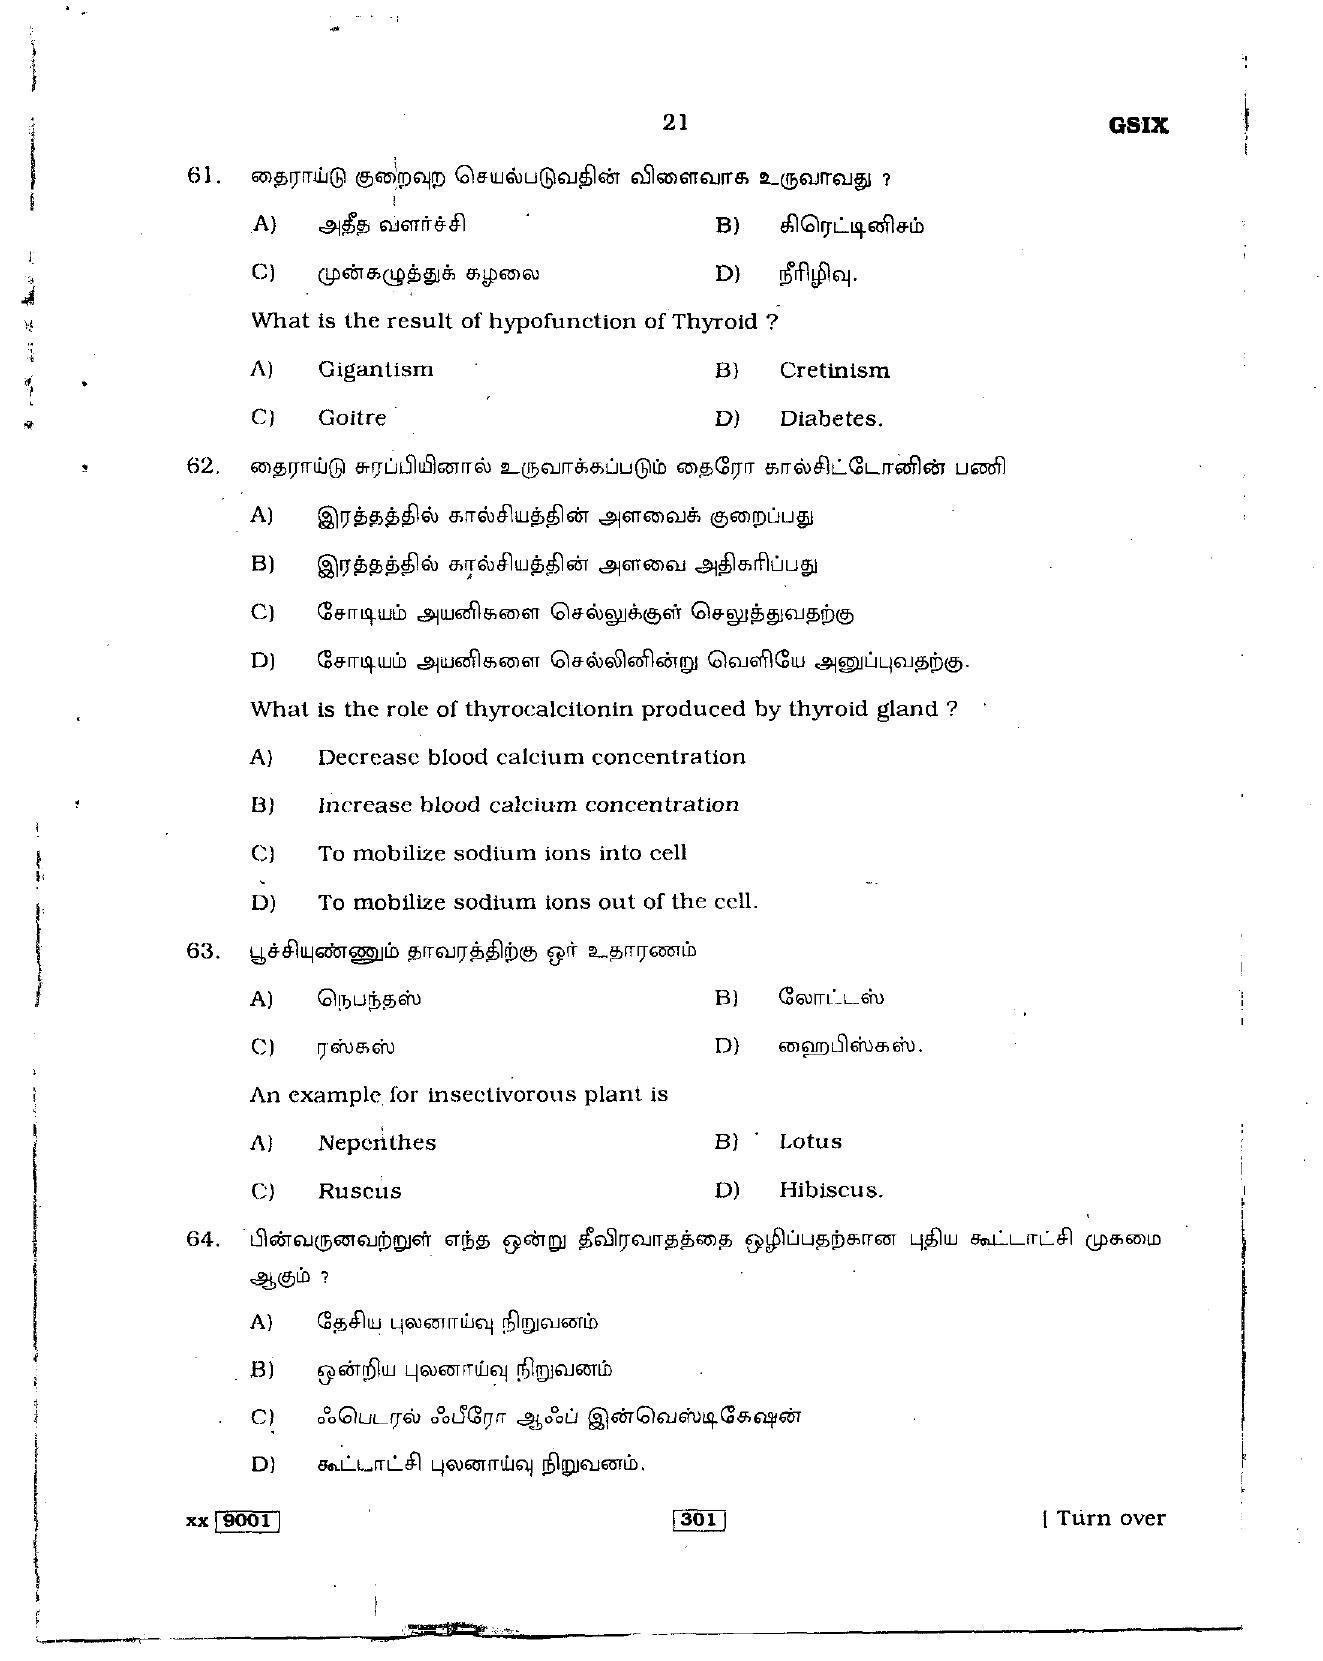 Delhi High Court Junior Judicial Assistant General Knowledge Previous Question Paper - Page 28